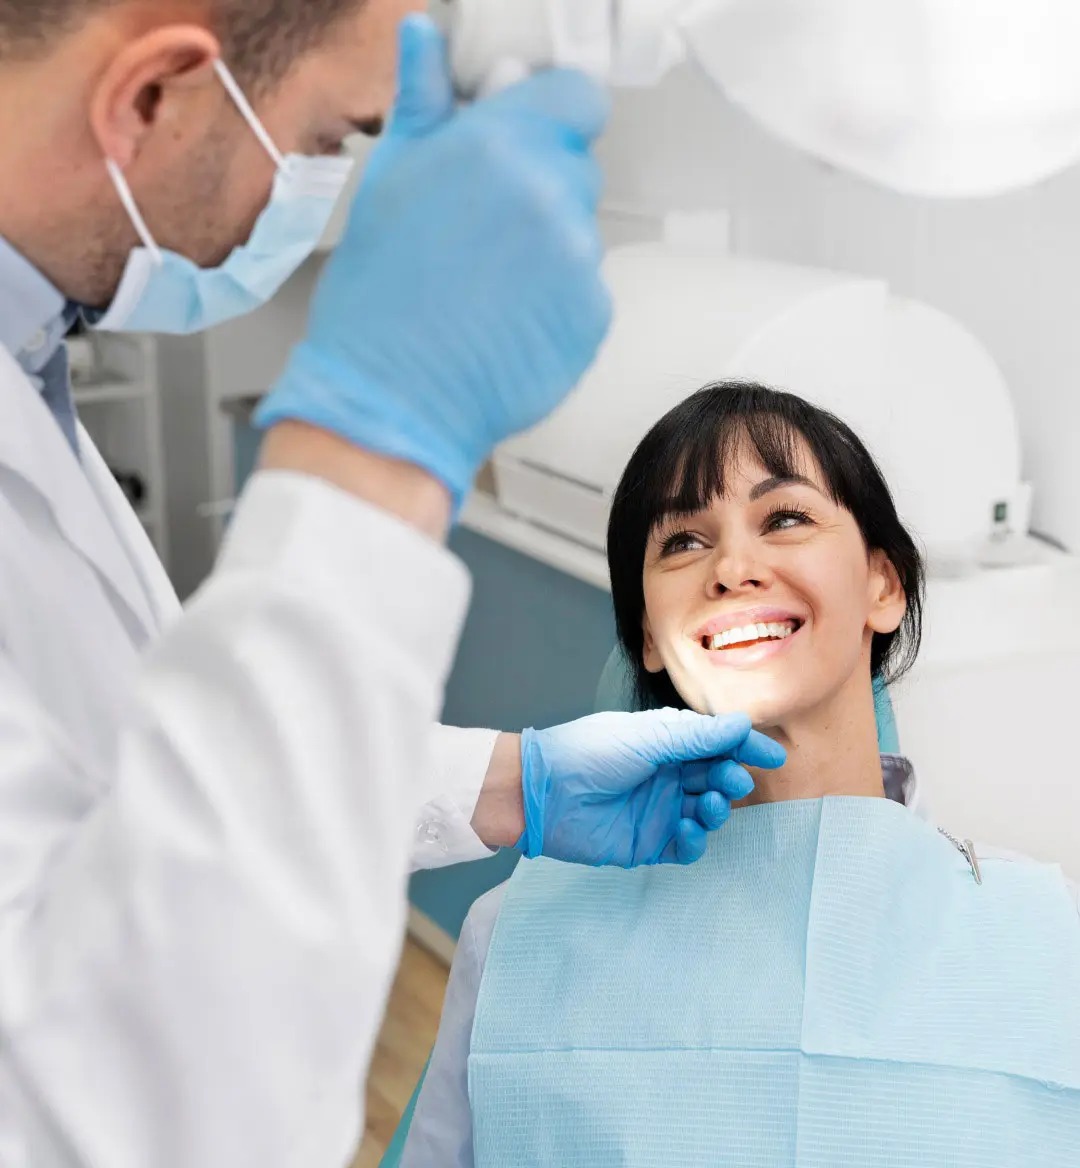 A Dentist Examining A Patient's Teeth